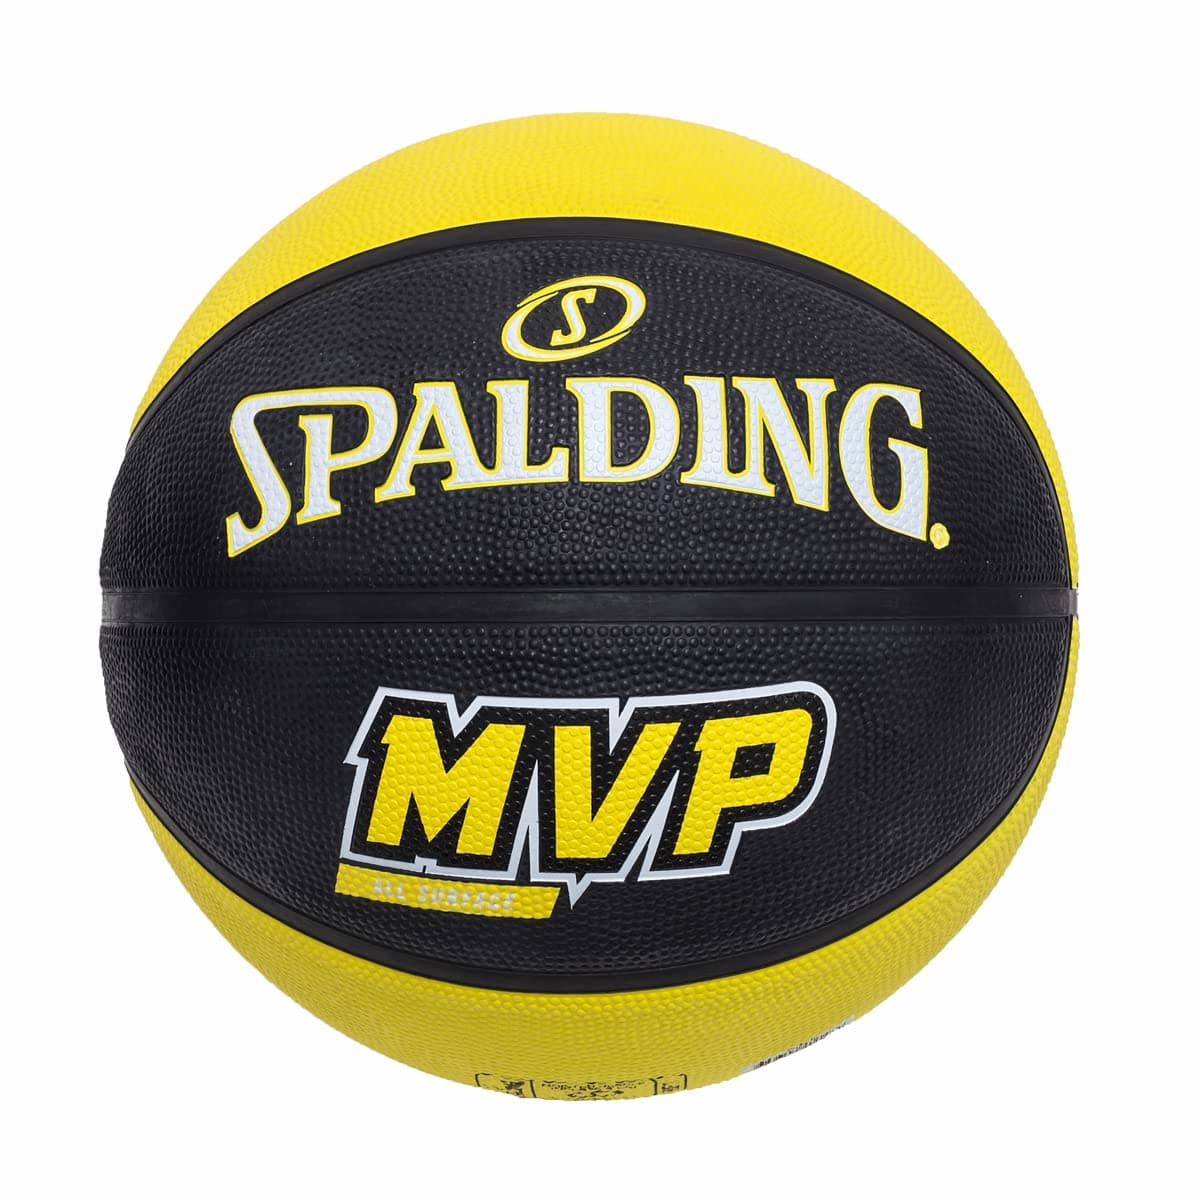 Spalding MVP Basketball, Black And Yellow, 7 - Athletix.ae